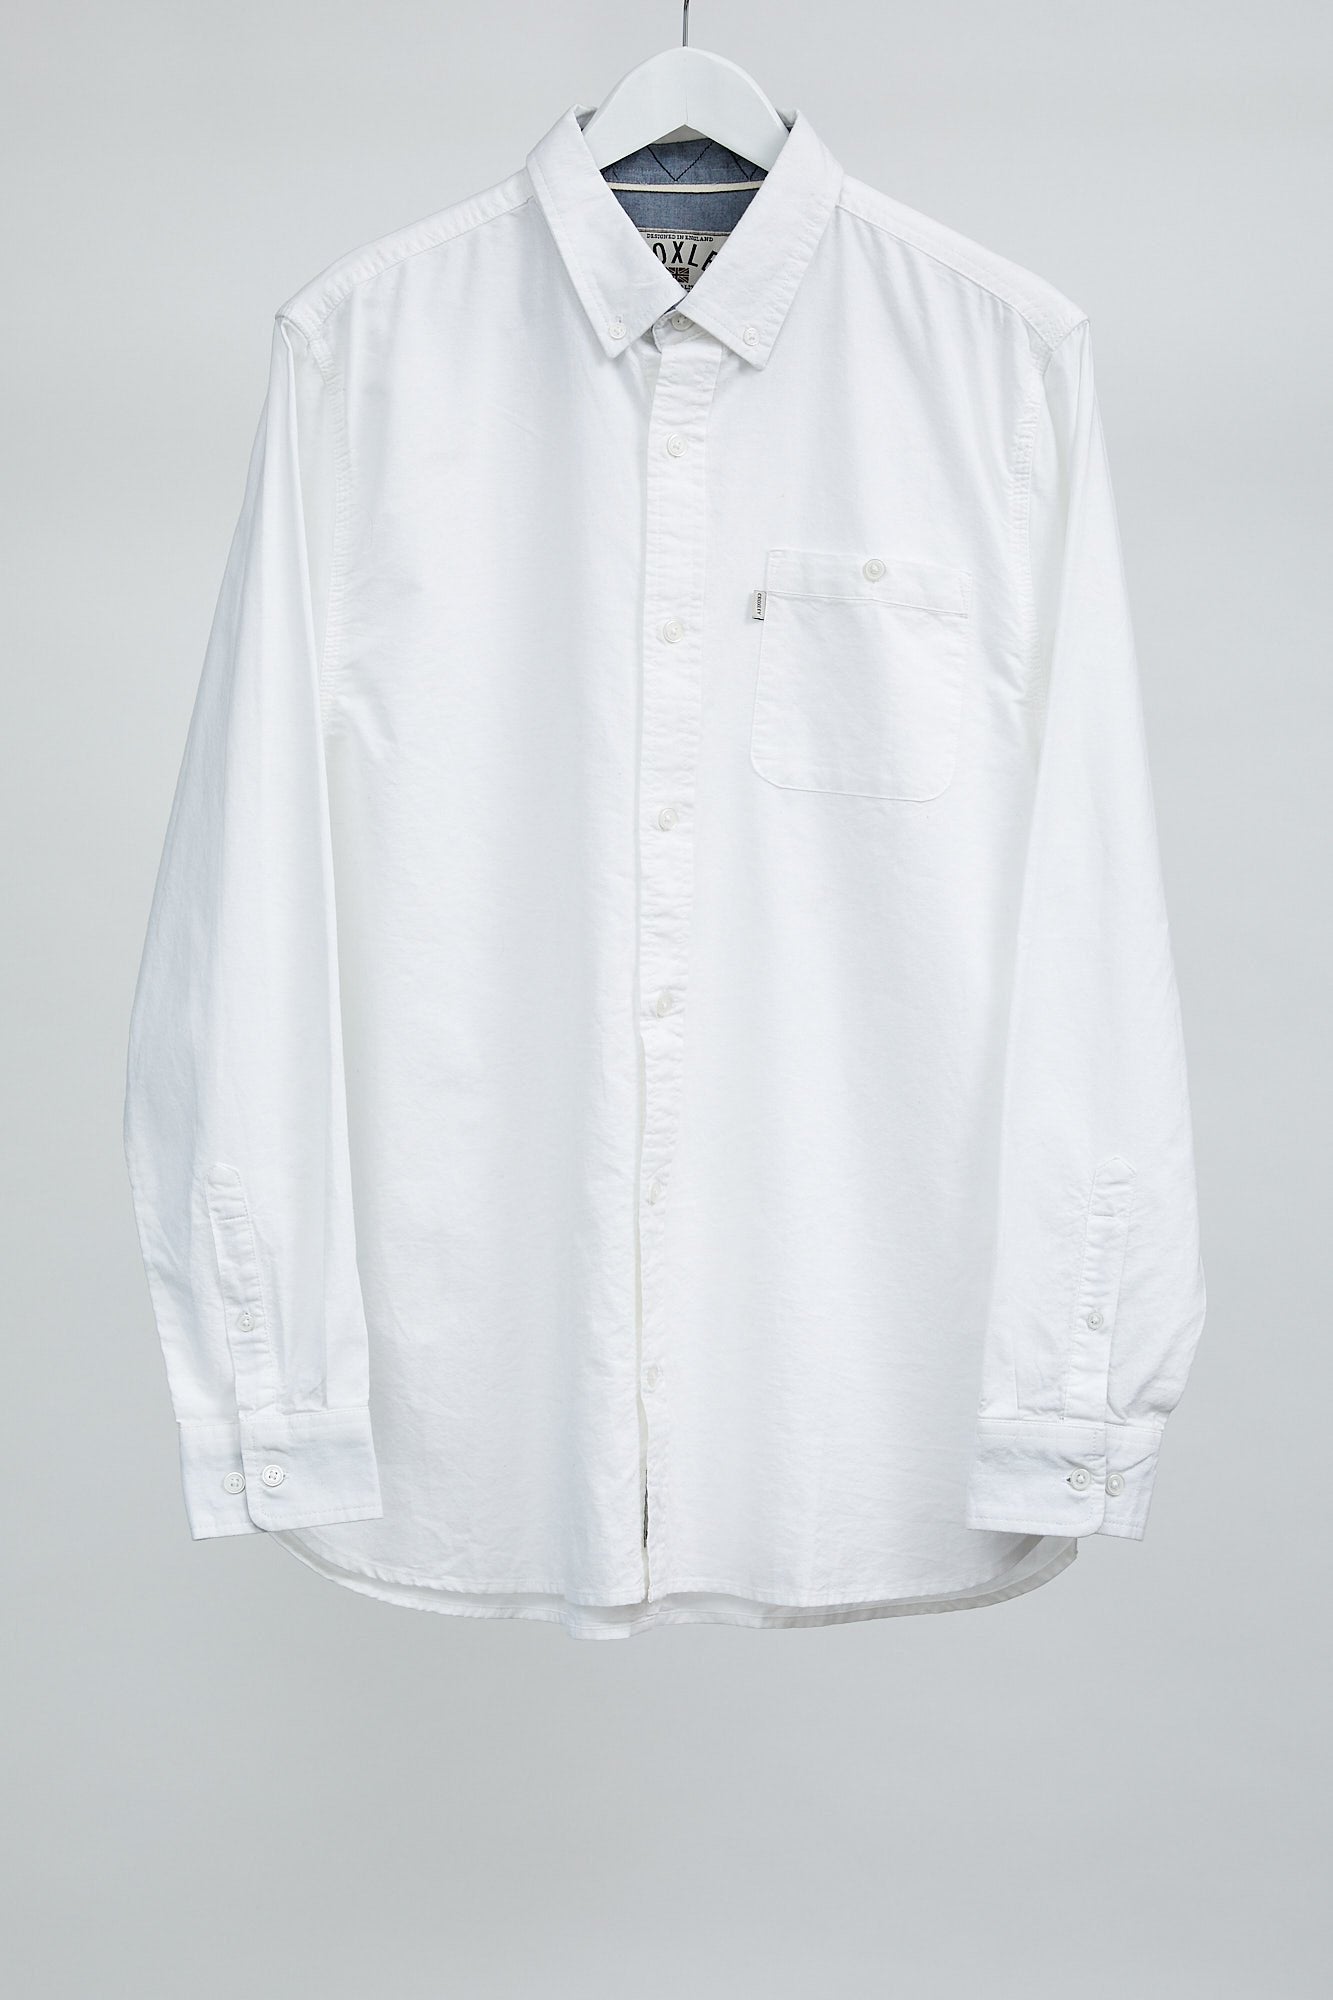 Mens White Shirt: Size Large